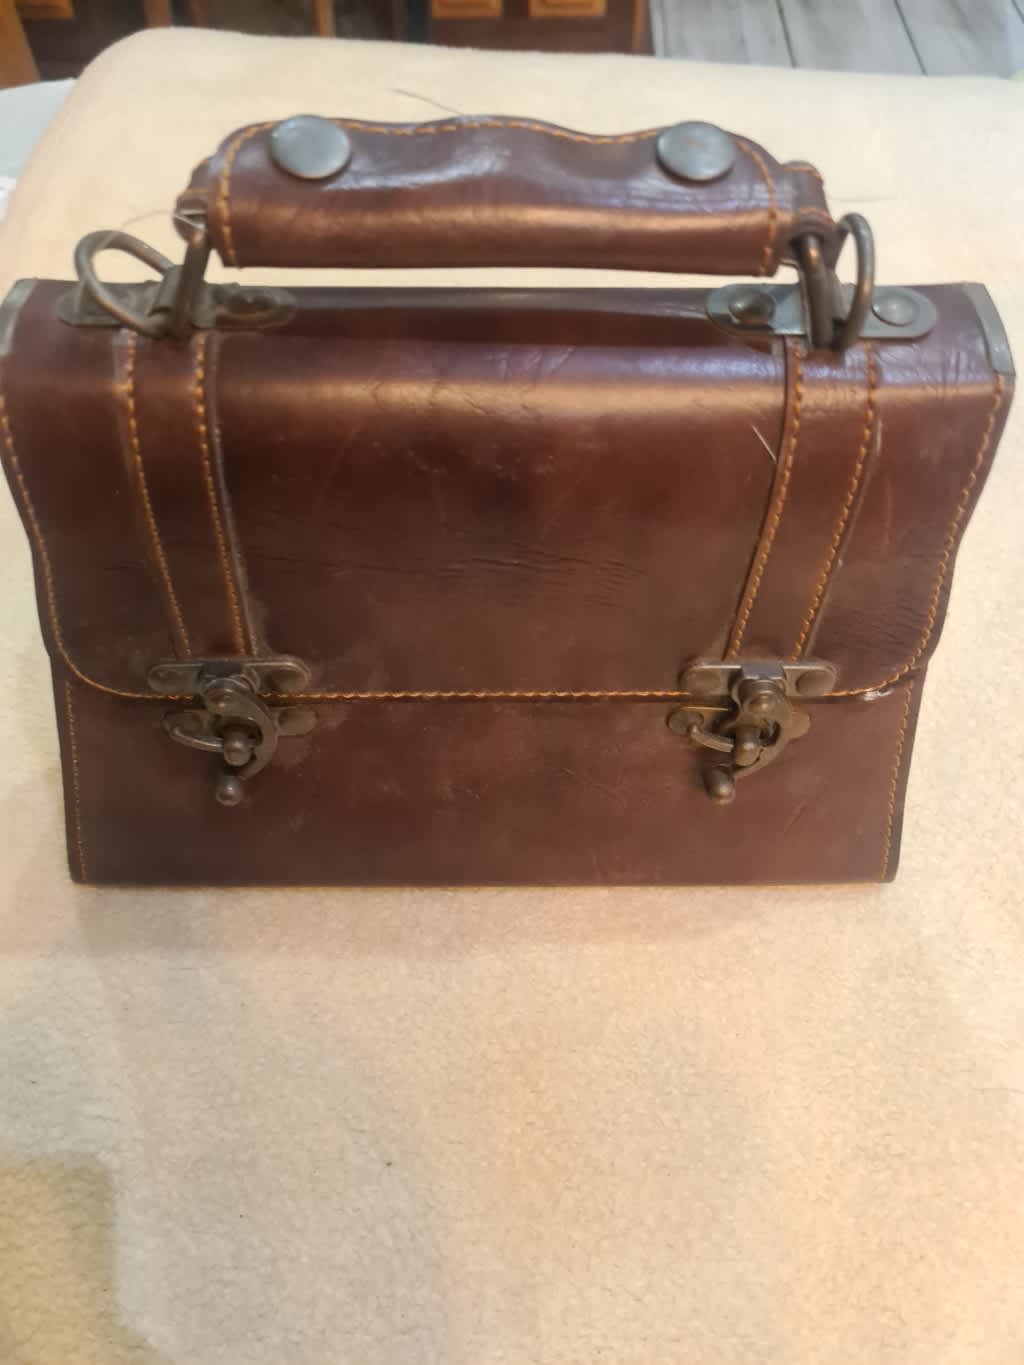 Handbags & Bags - VINTAGE GENUINE LEATHER HANDBAG was sold for R61.00 ...